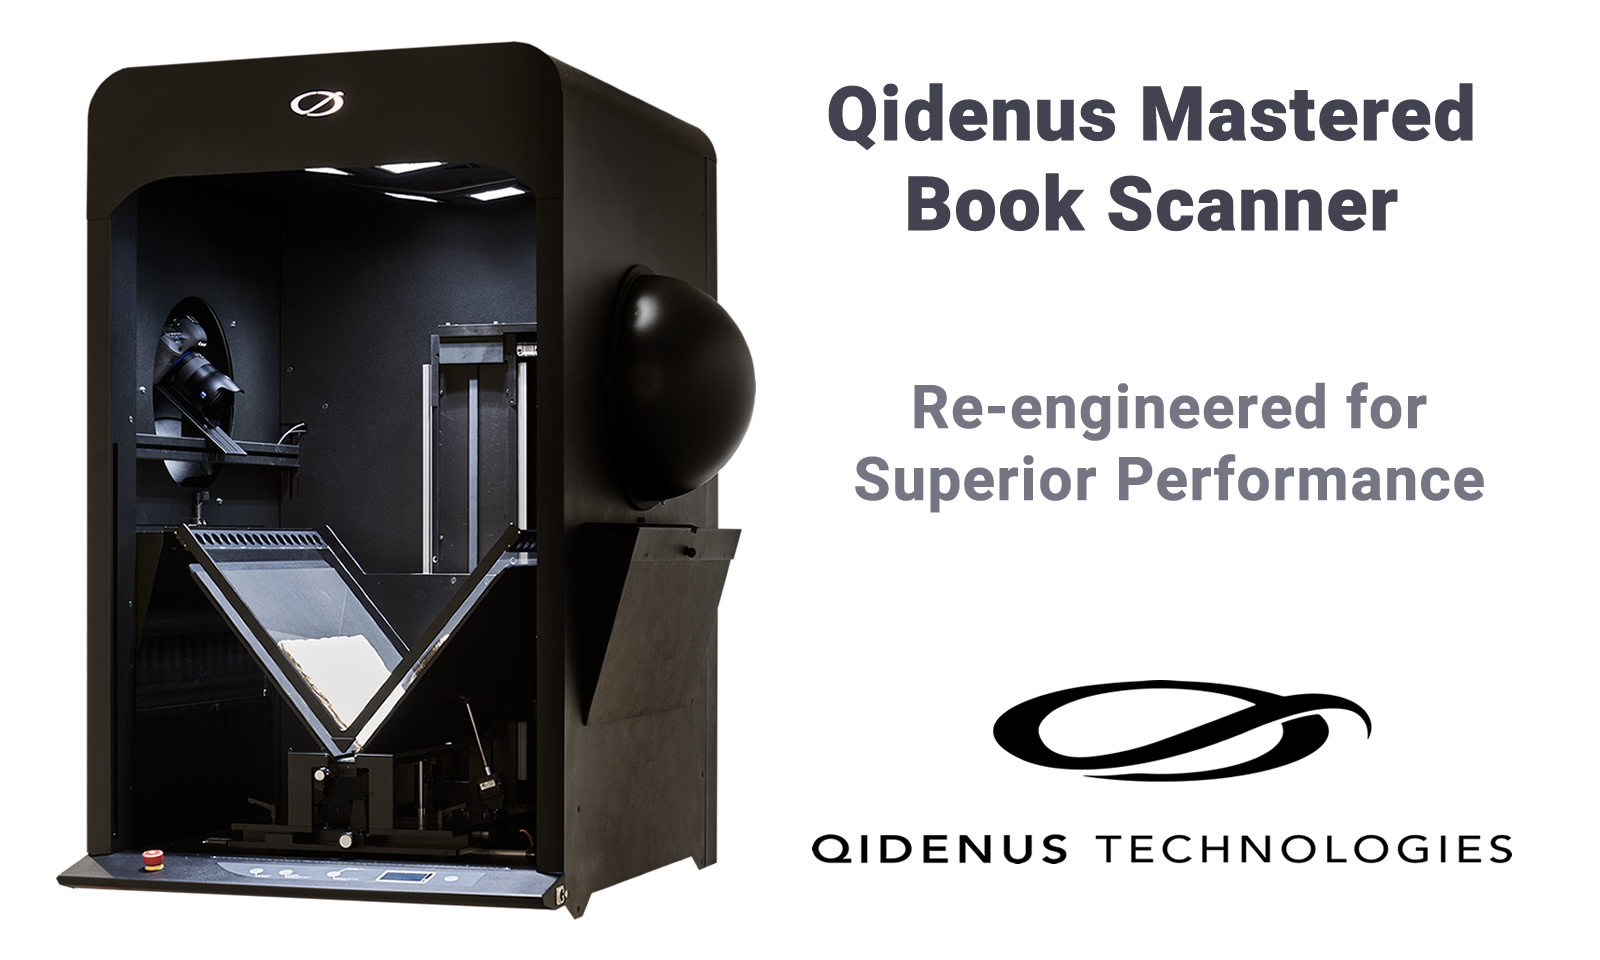 iGuana - Qidenus Mastered Book Scanner (Ultra Fast, Superior Performance)